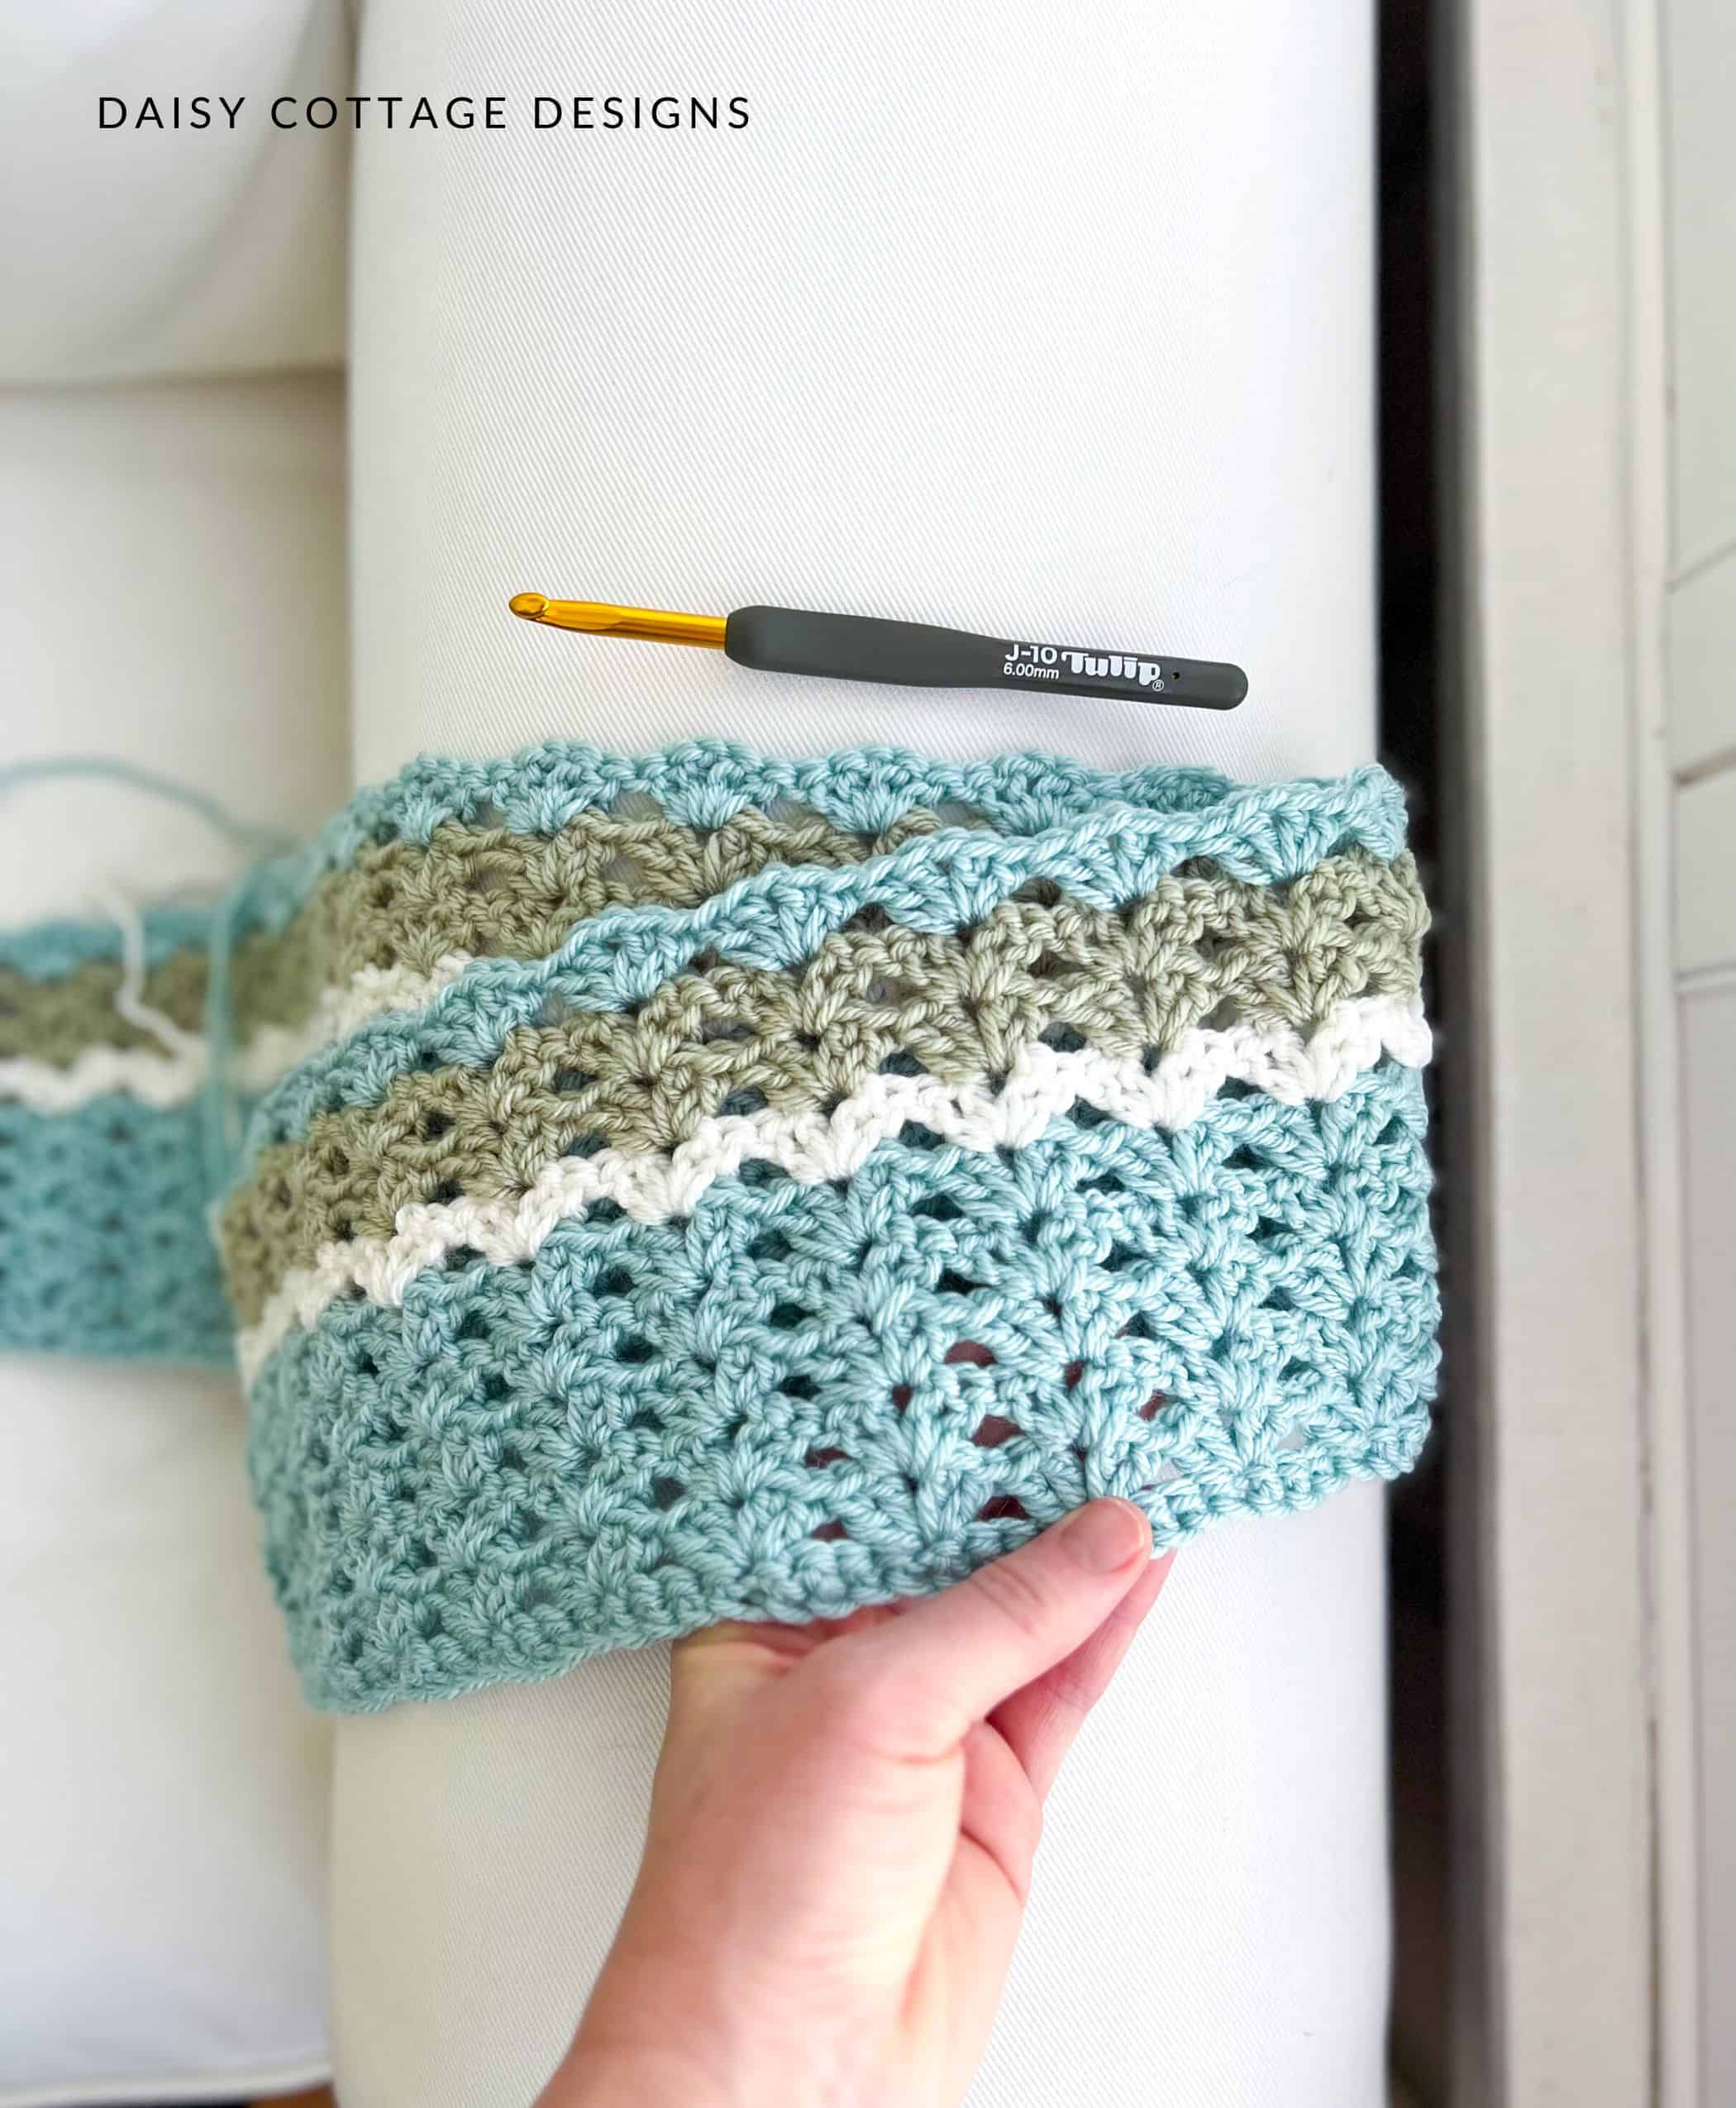 Crochet Blanket closeup